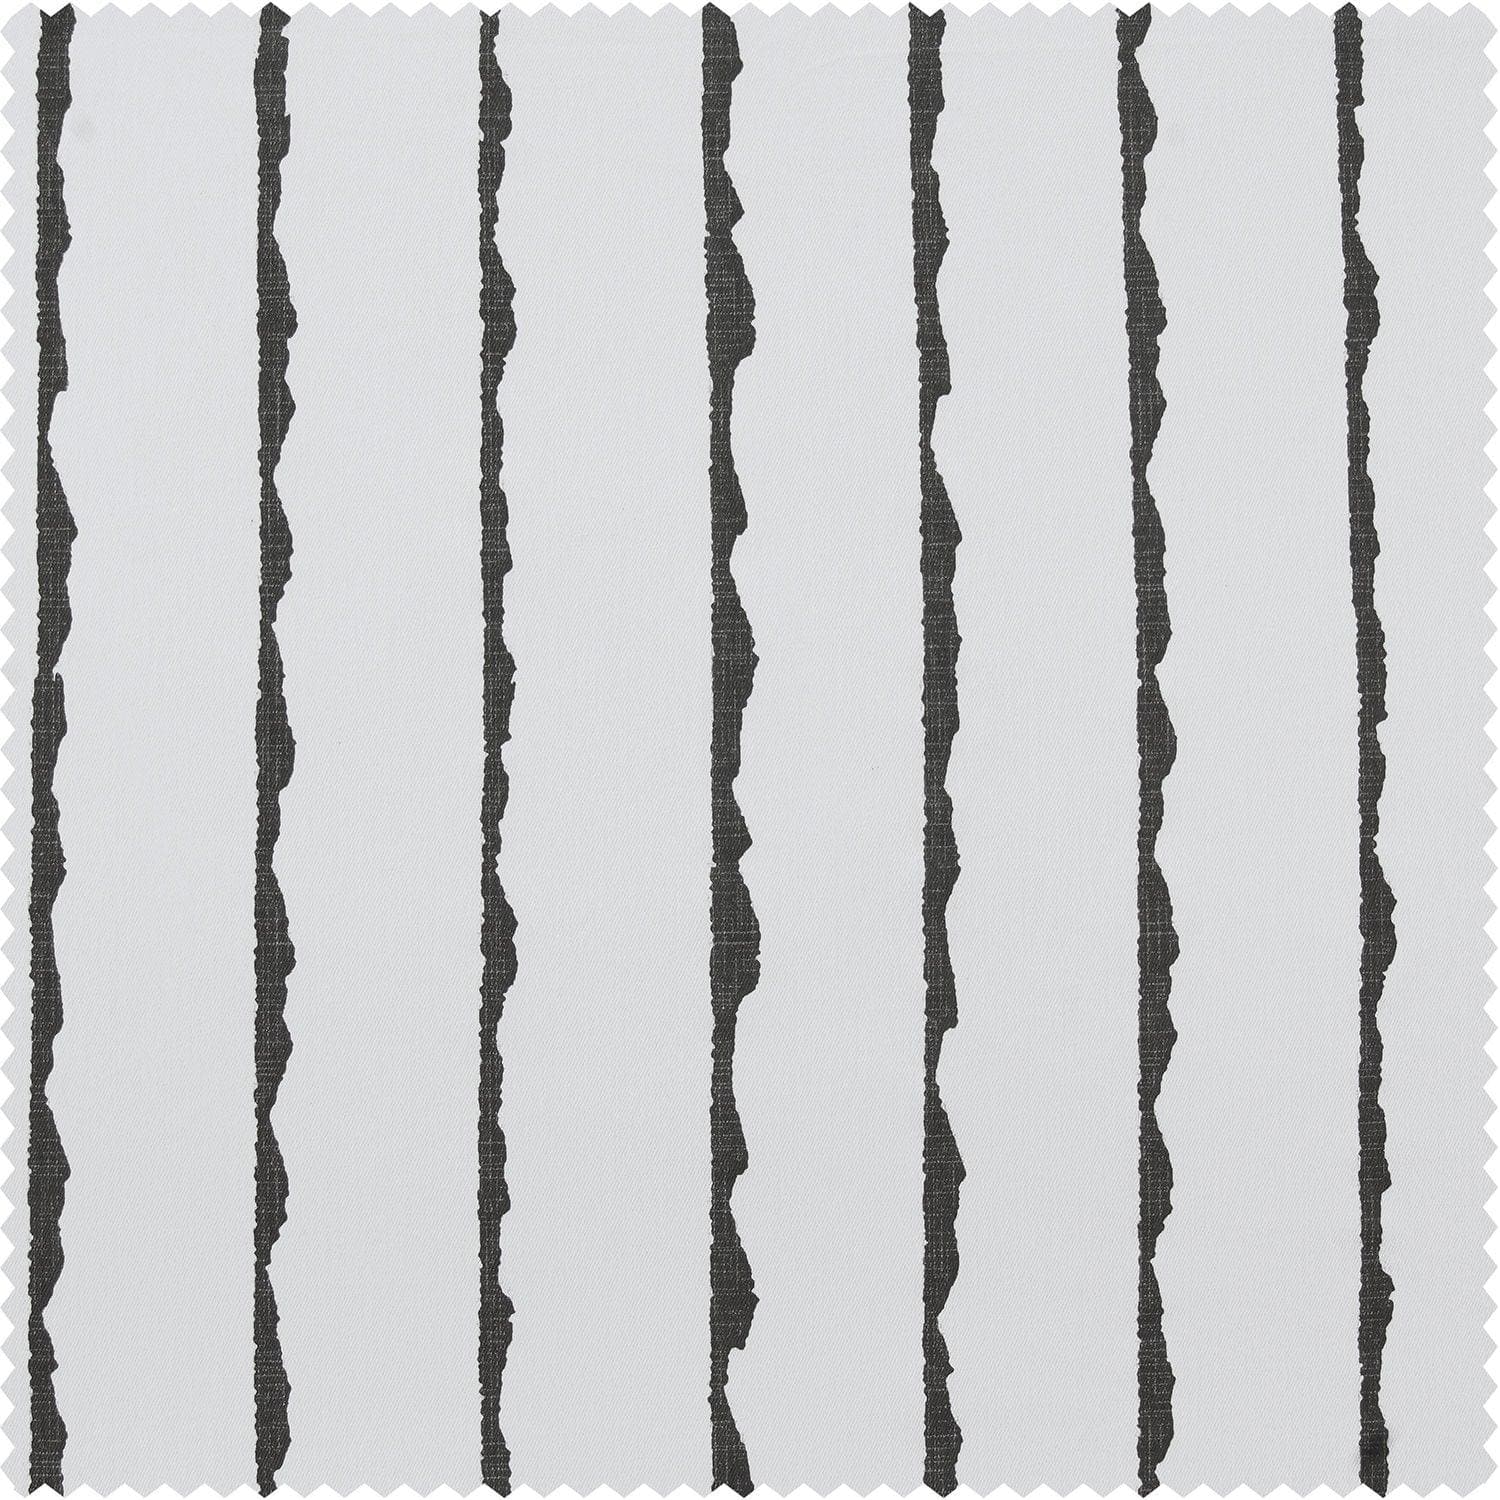 Sharkskin Black Striped French Pleat Printed Cotton Room Darkening Curtain